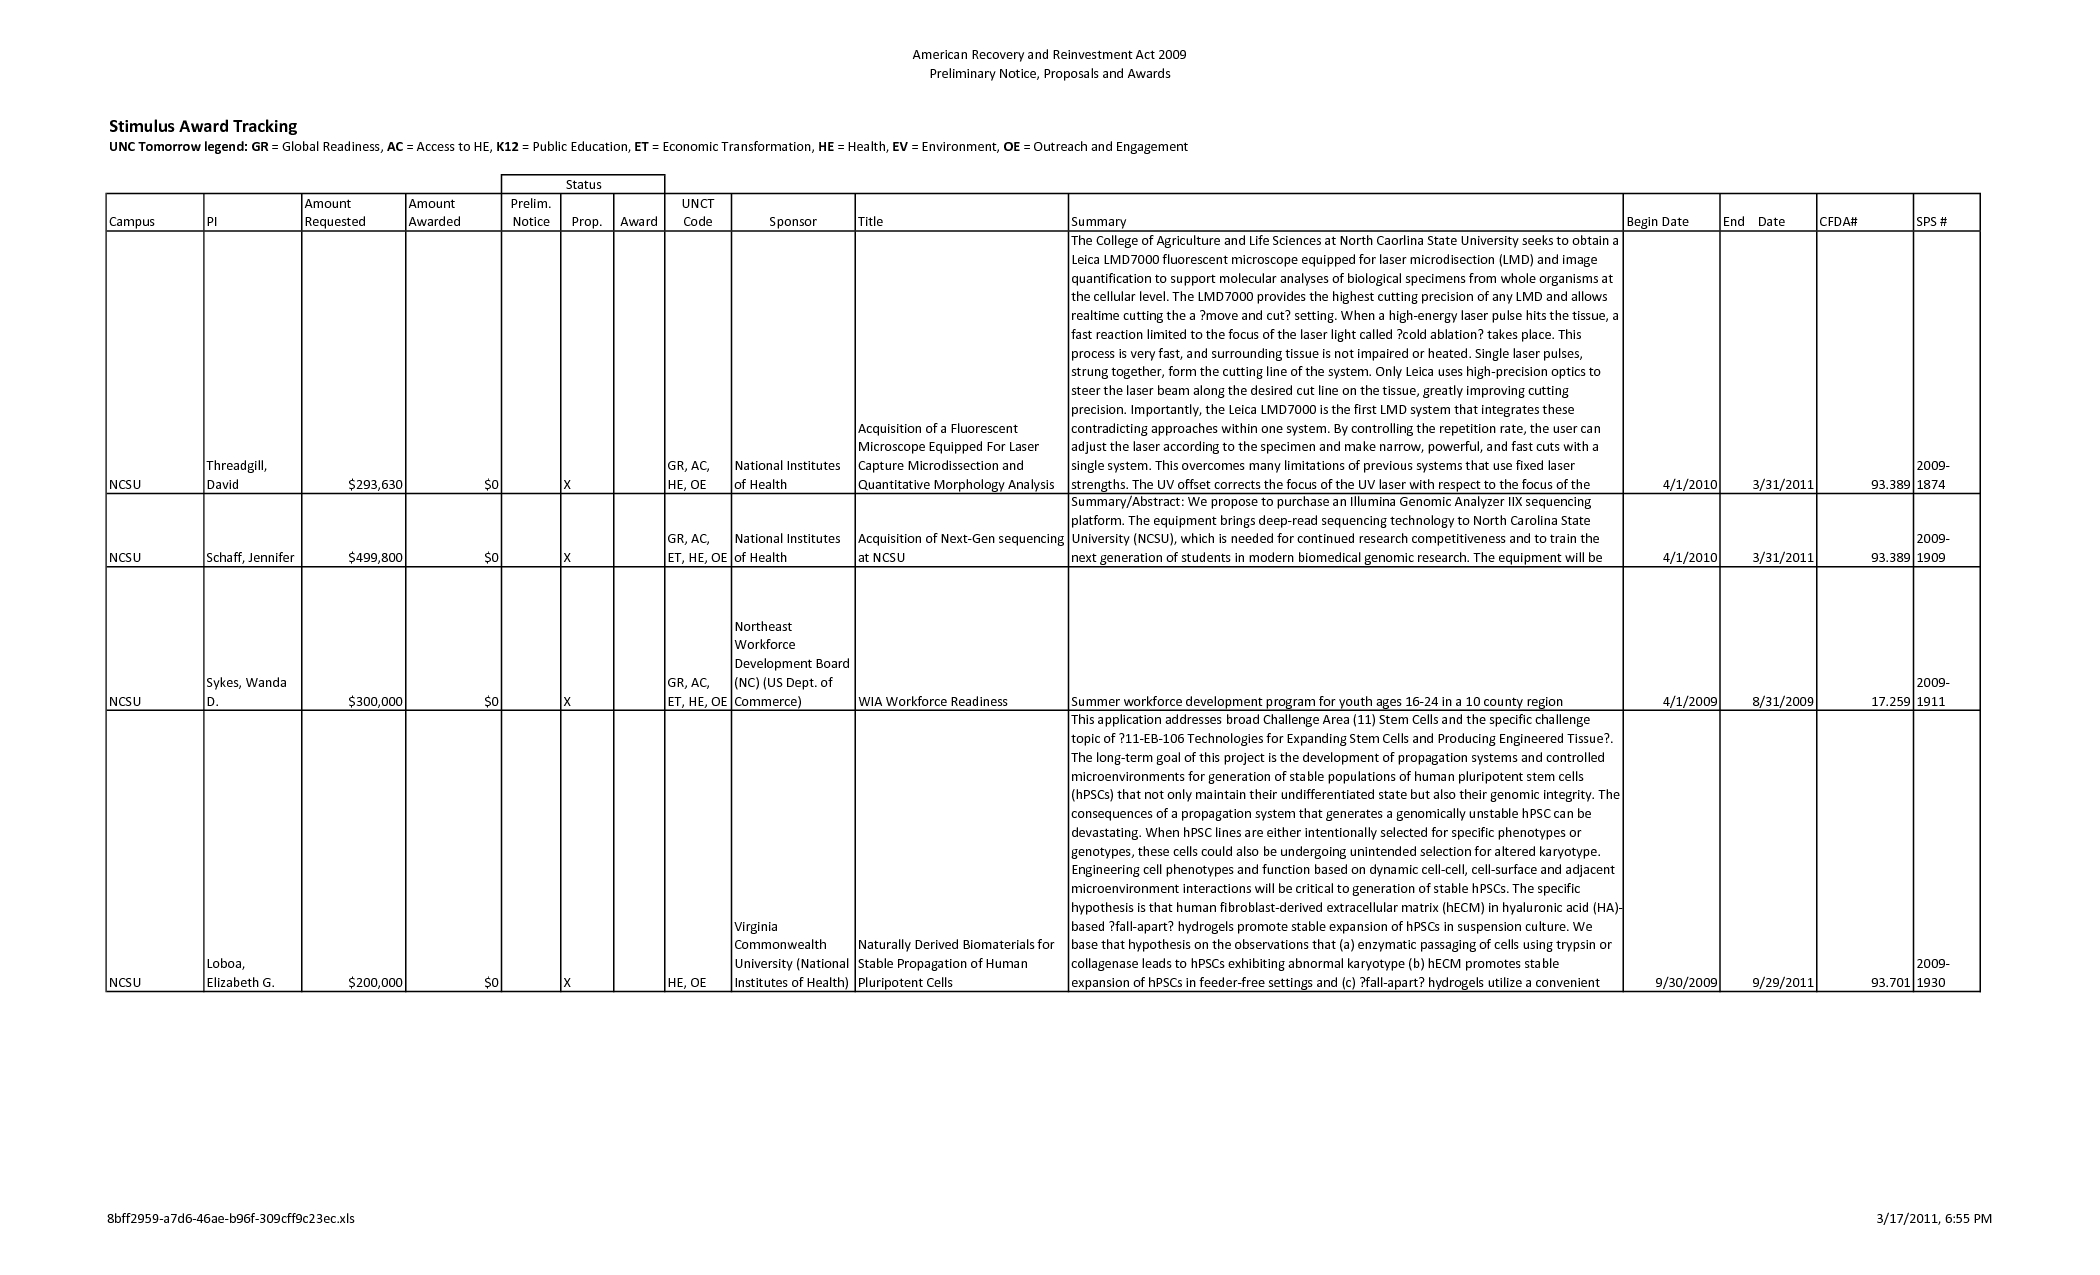 Nursing Care Plan Worksheet | Printable Worksheets And With Nursing Care Plan Templates Blank